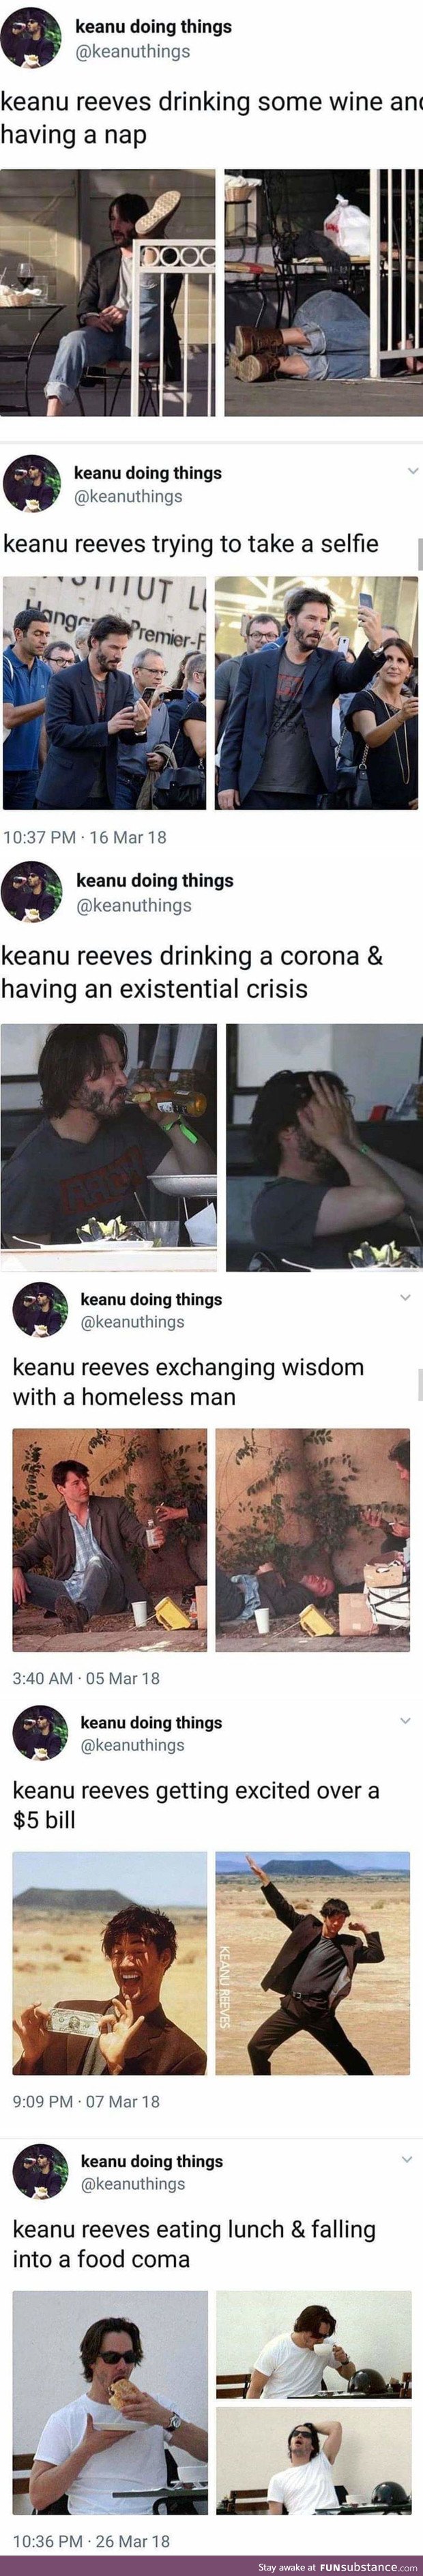 Keanu reevesing about town